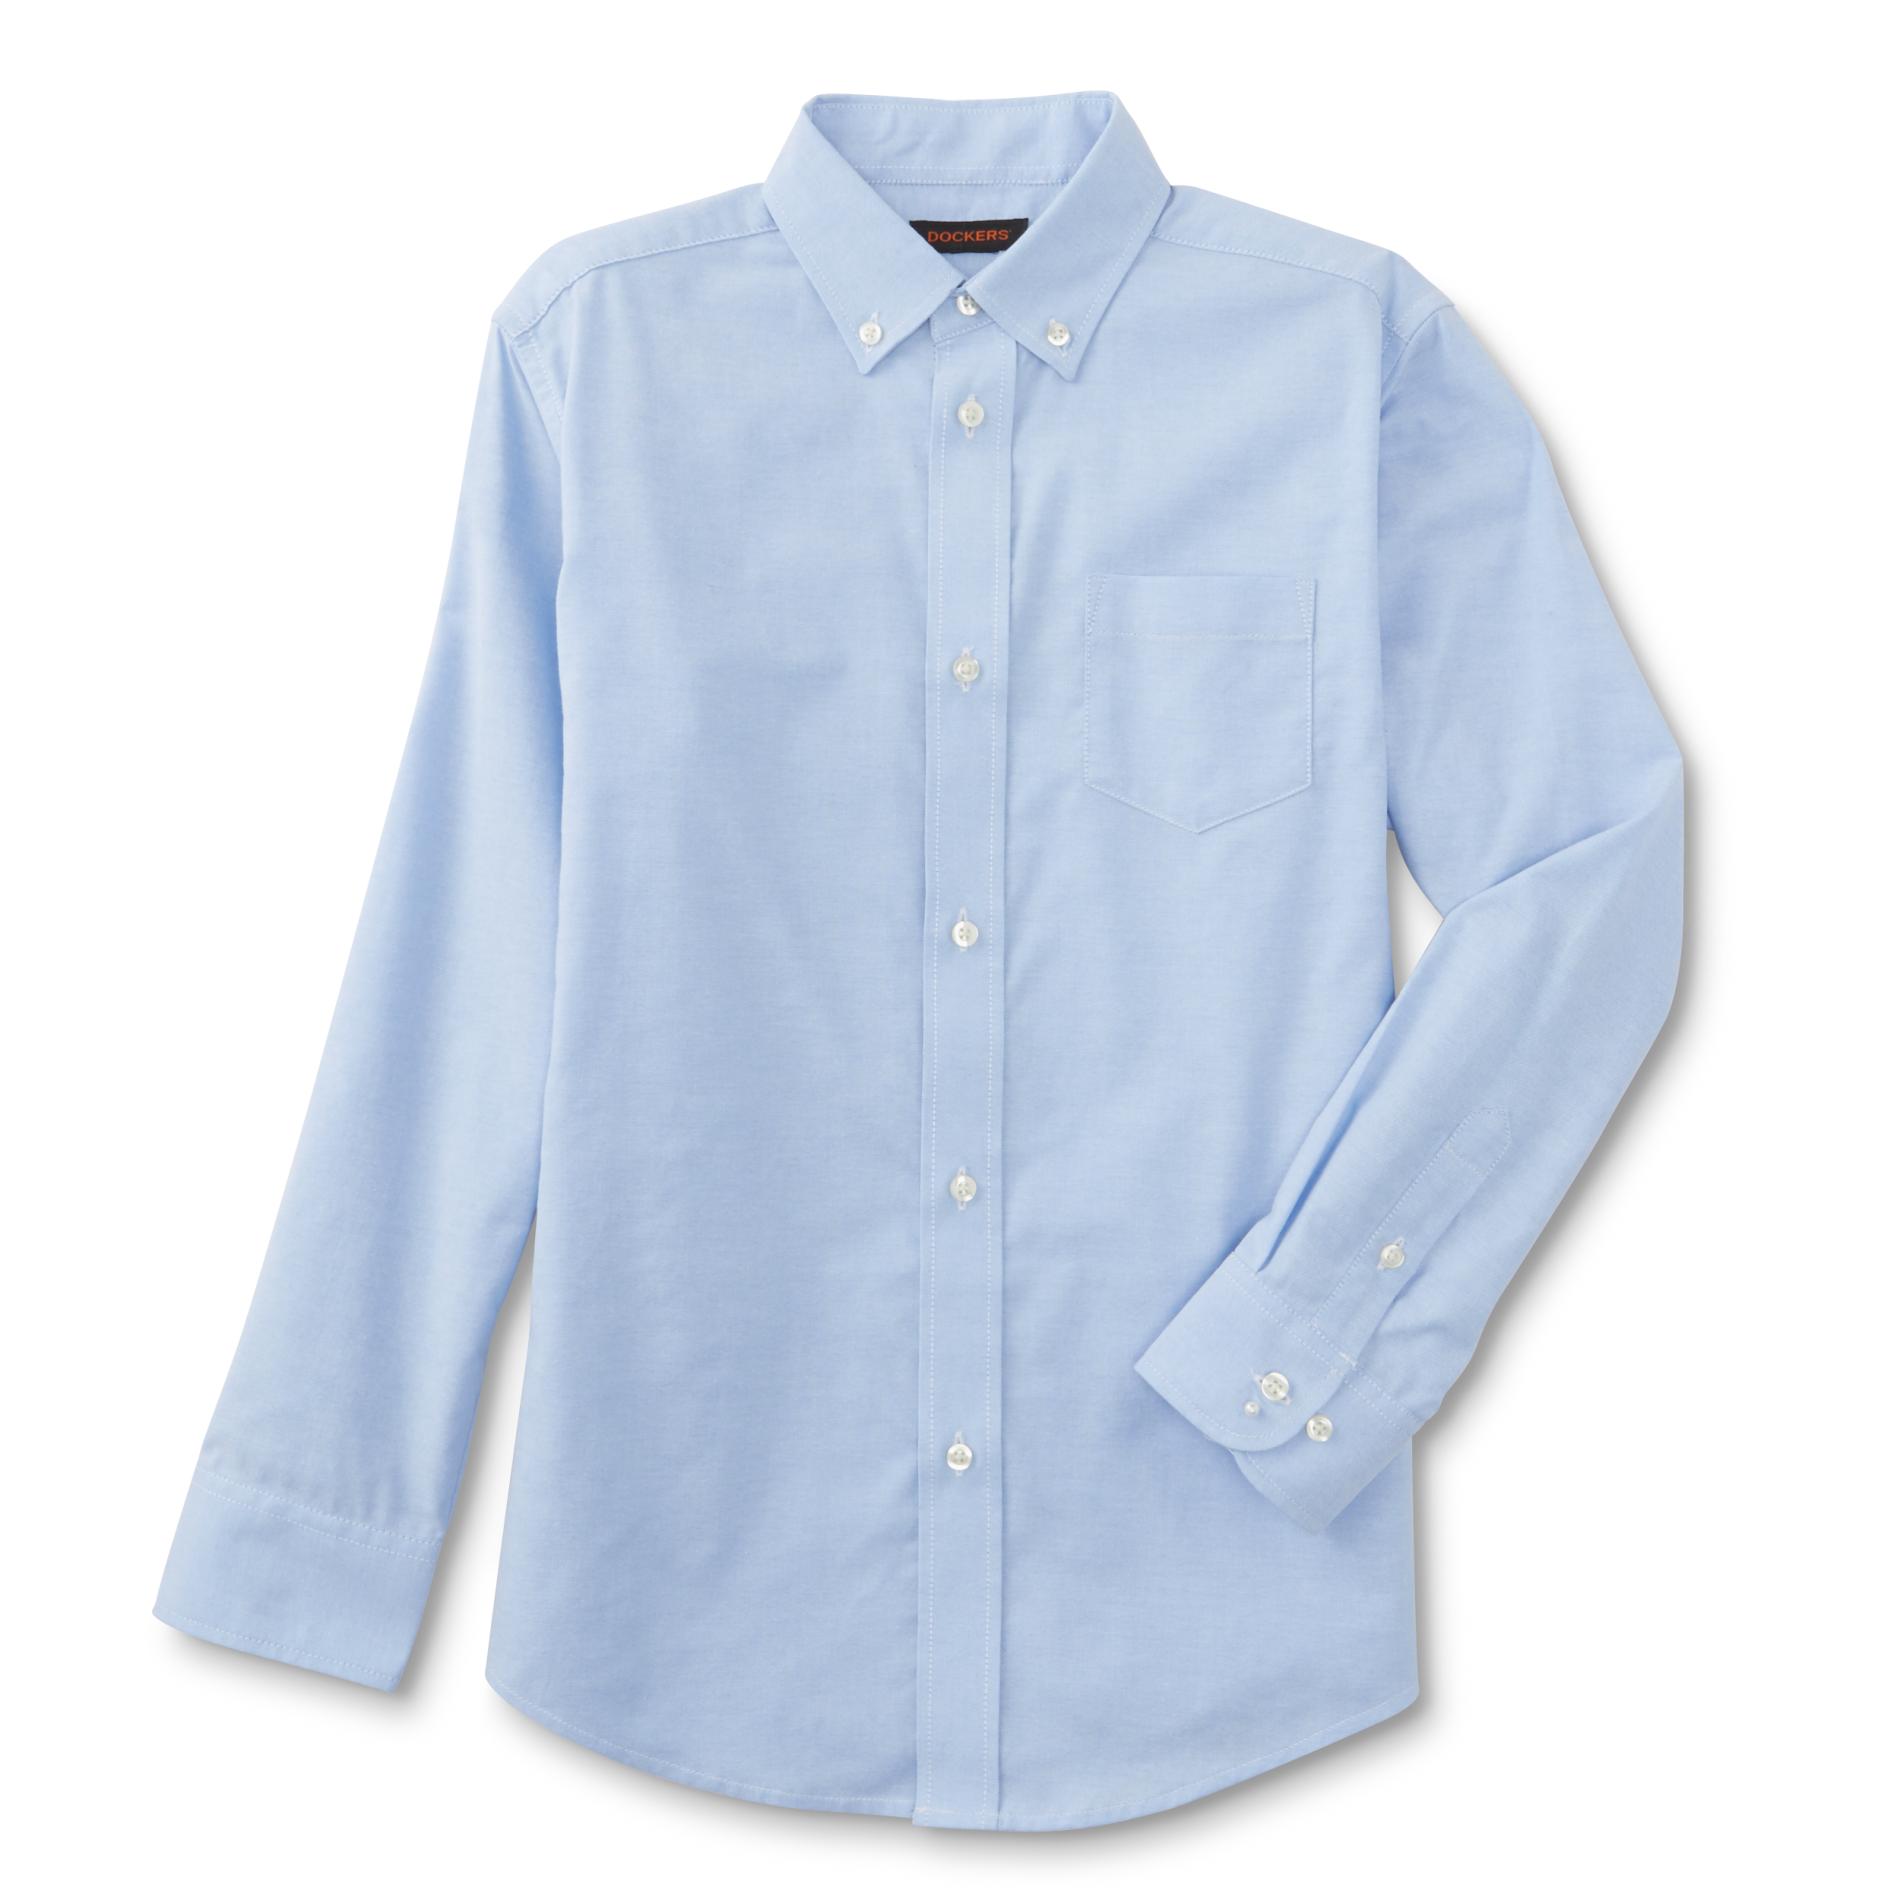 Dockers Boy's Long-Sleeve Oxford Shirt